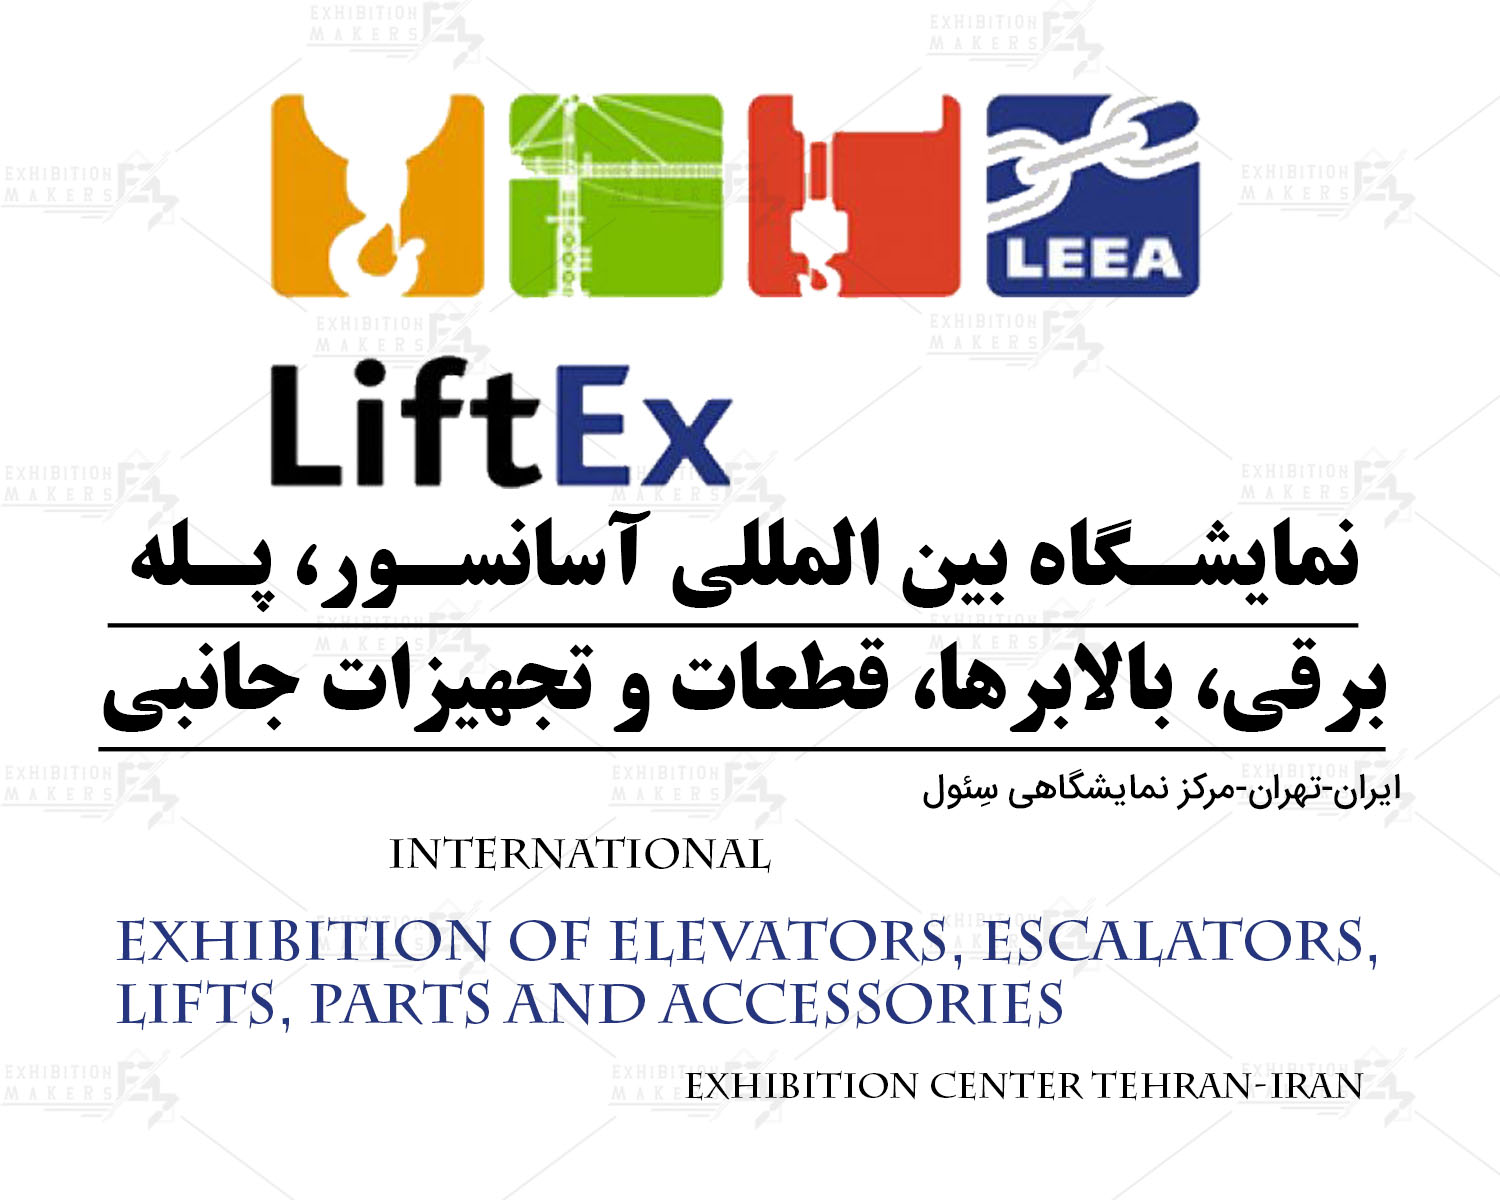 International Exhibition of Elevators, Escalators, Lifts, Conveyors, Parts and Accessories